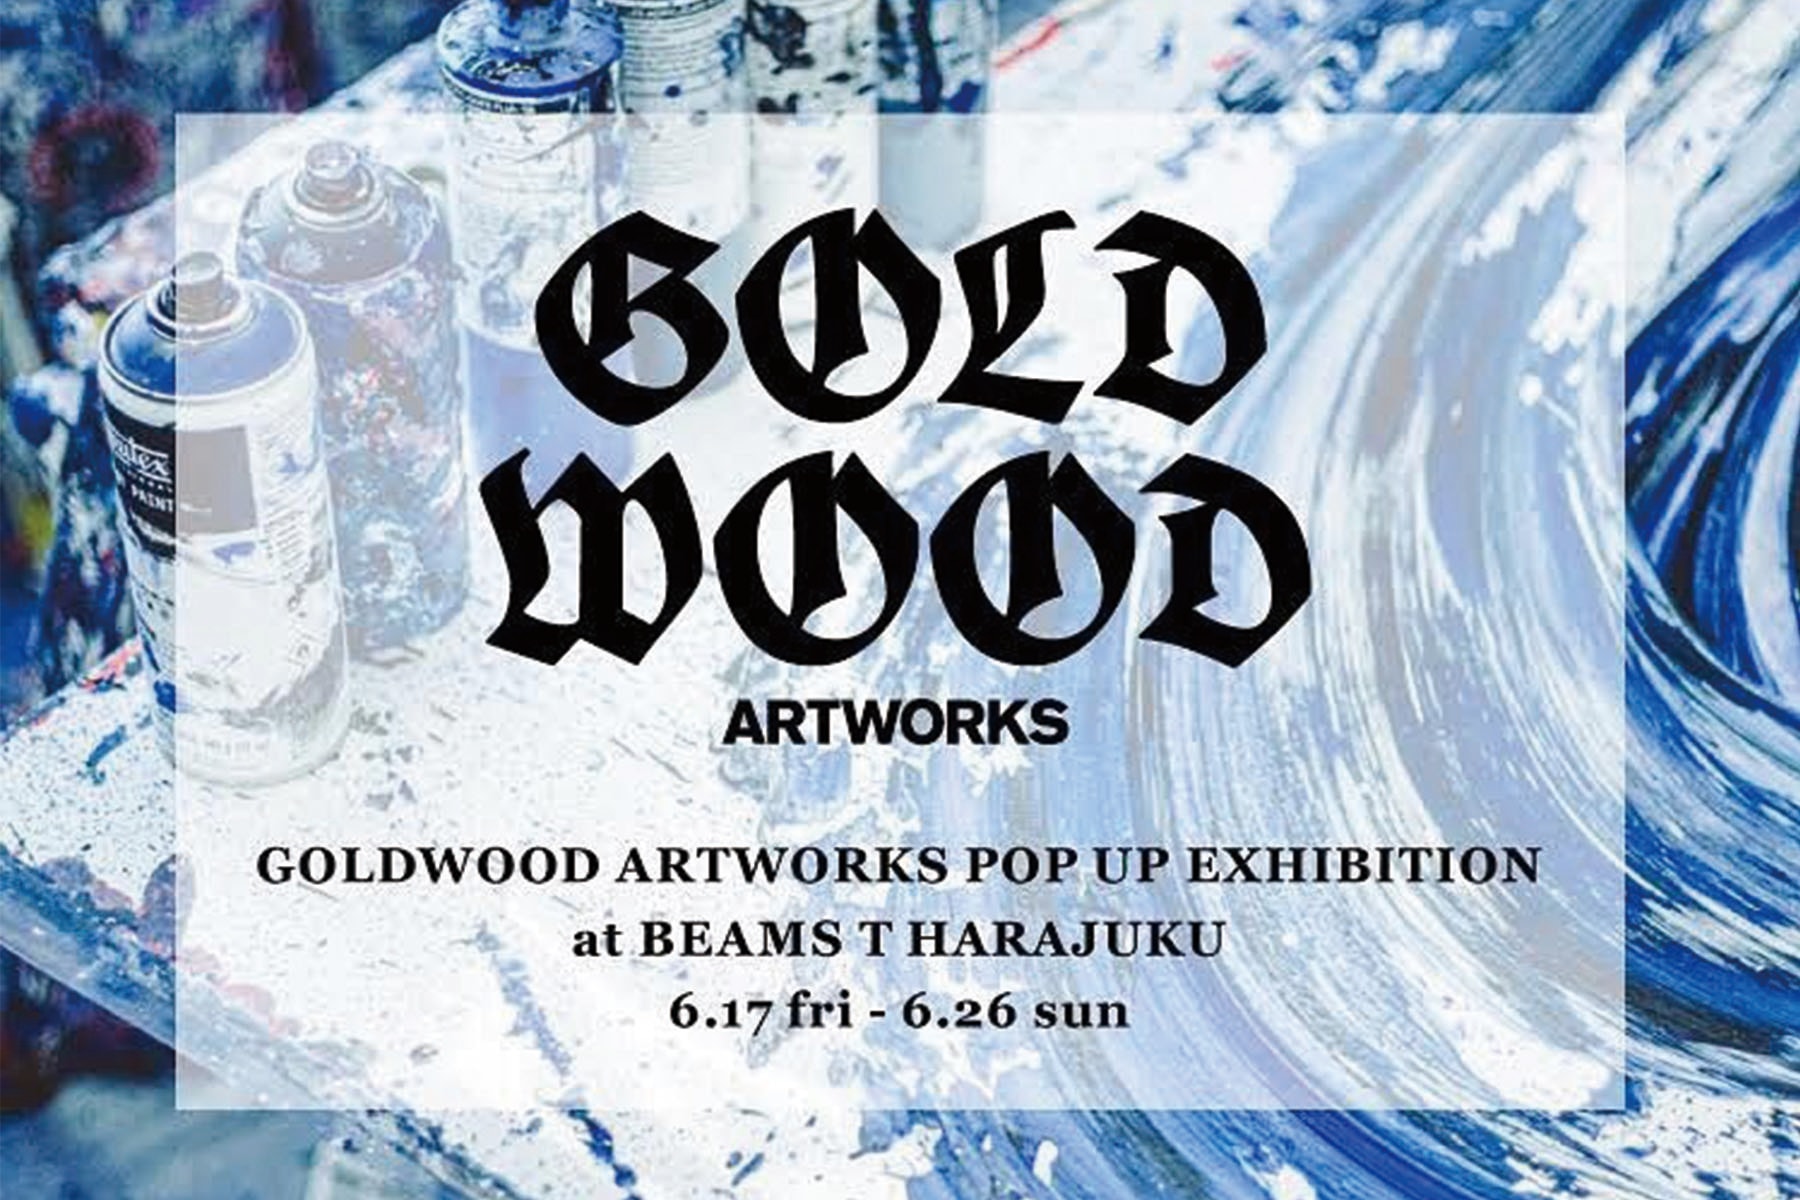 BEAMS T 宣佈攜手 GOLDWOOD ARTWORKS 舉辦快閃展覽